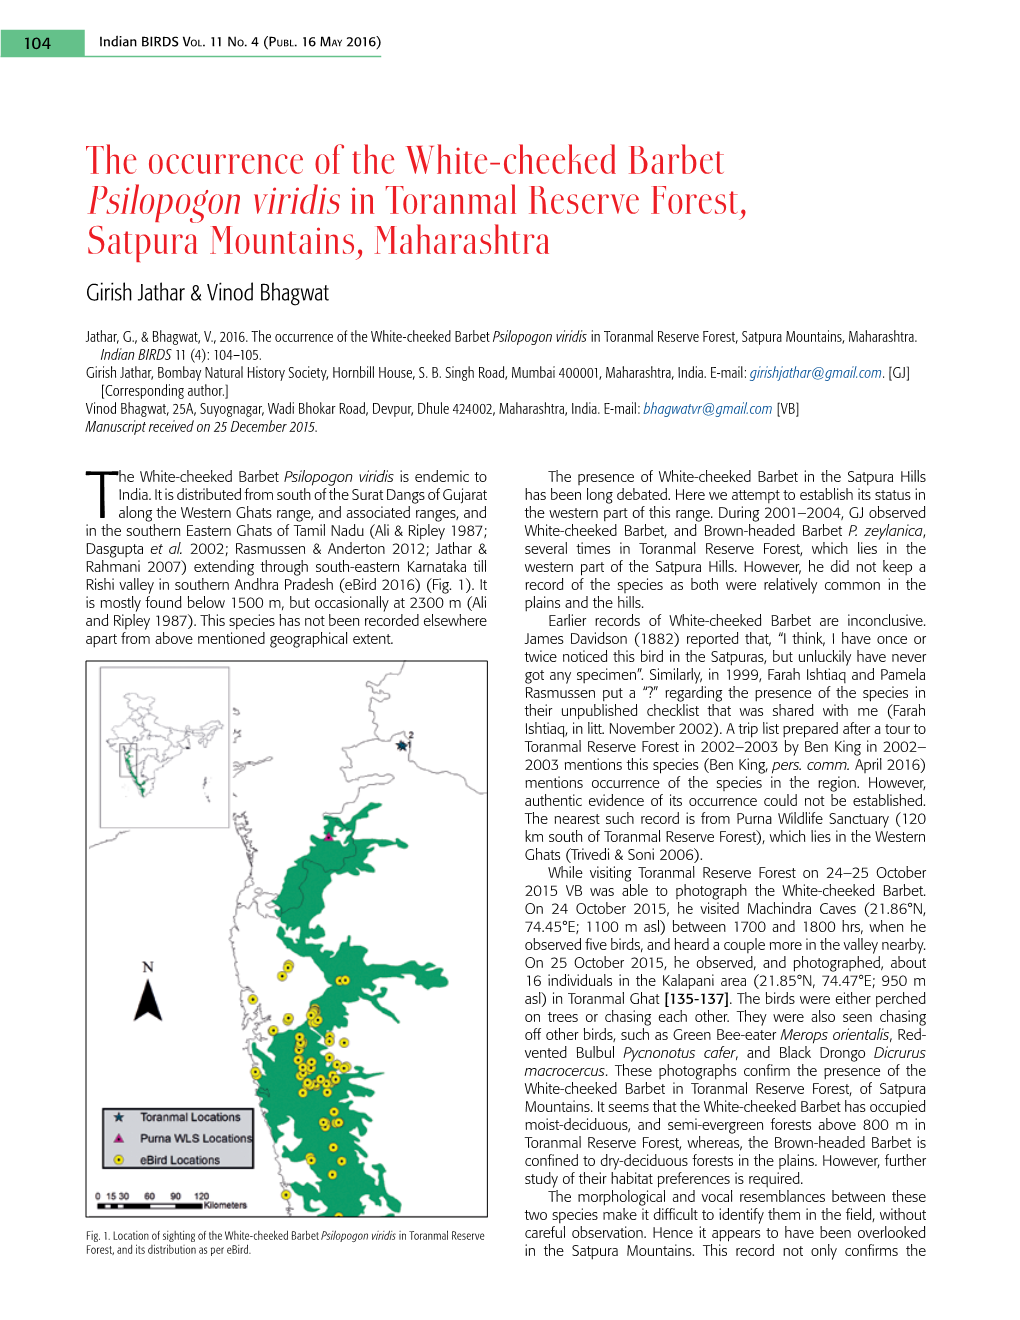 The Occurrence of the White-Cheeked Barbet Psilopogon Viridis in Toranmal Reserve Forest, Satpura Mountains, Maharashtra Girish Jathar & Vinod Bhagwat